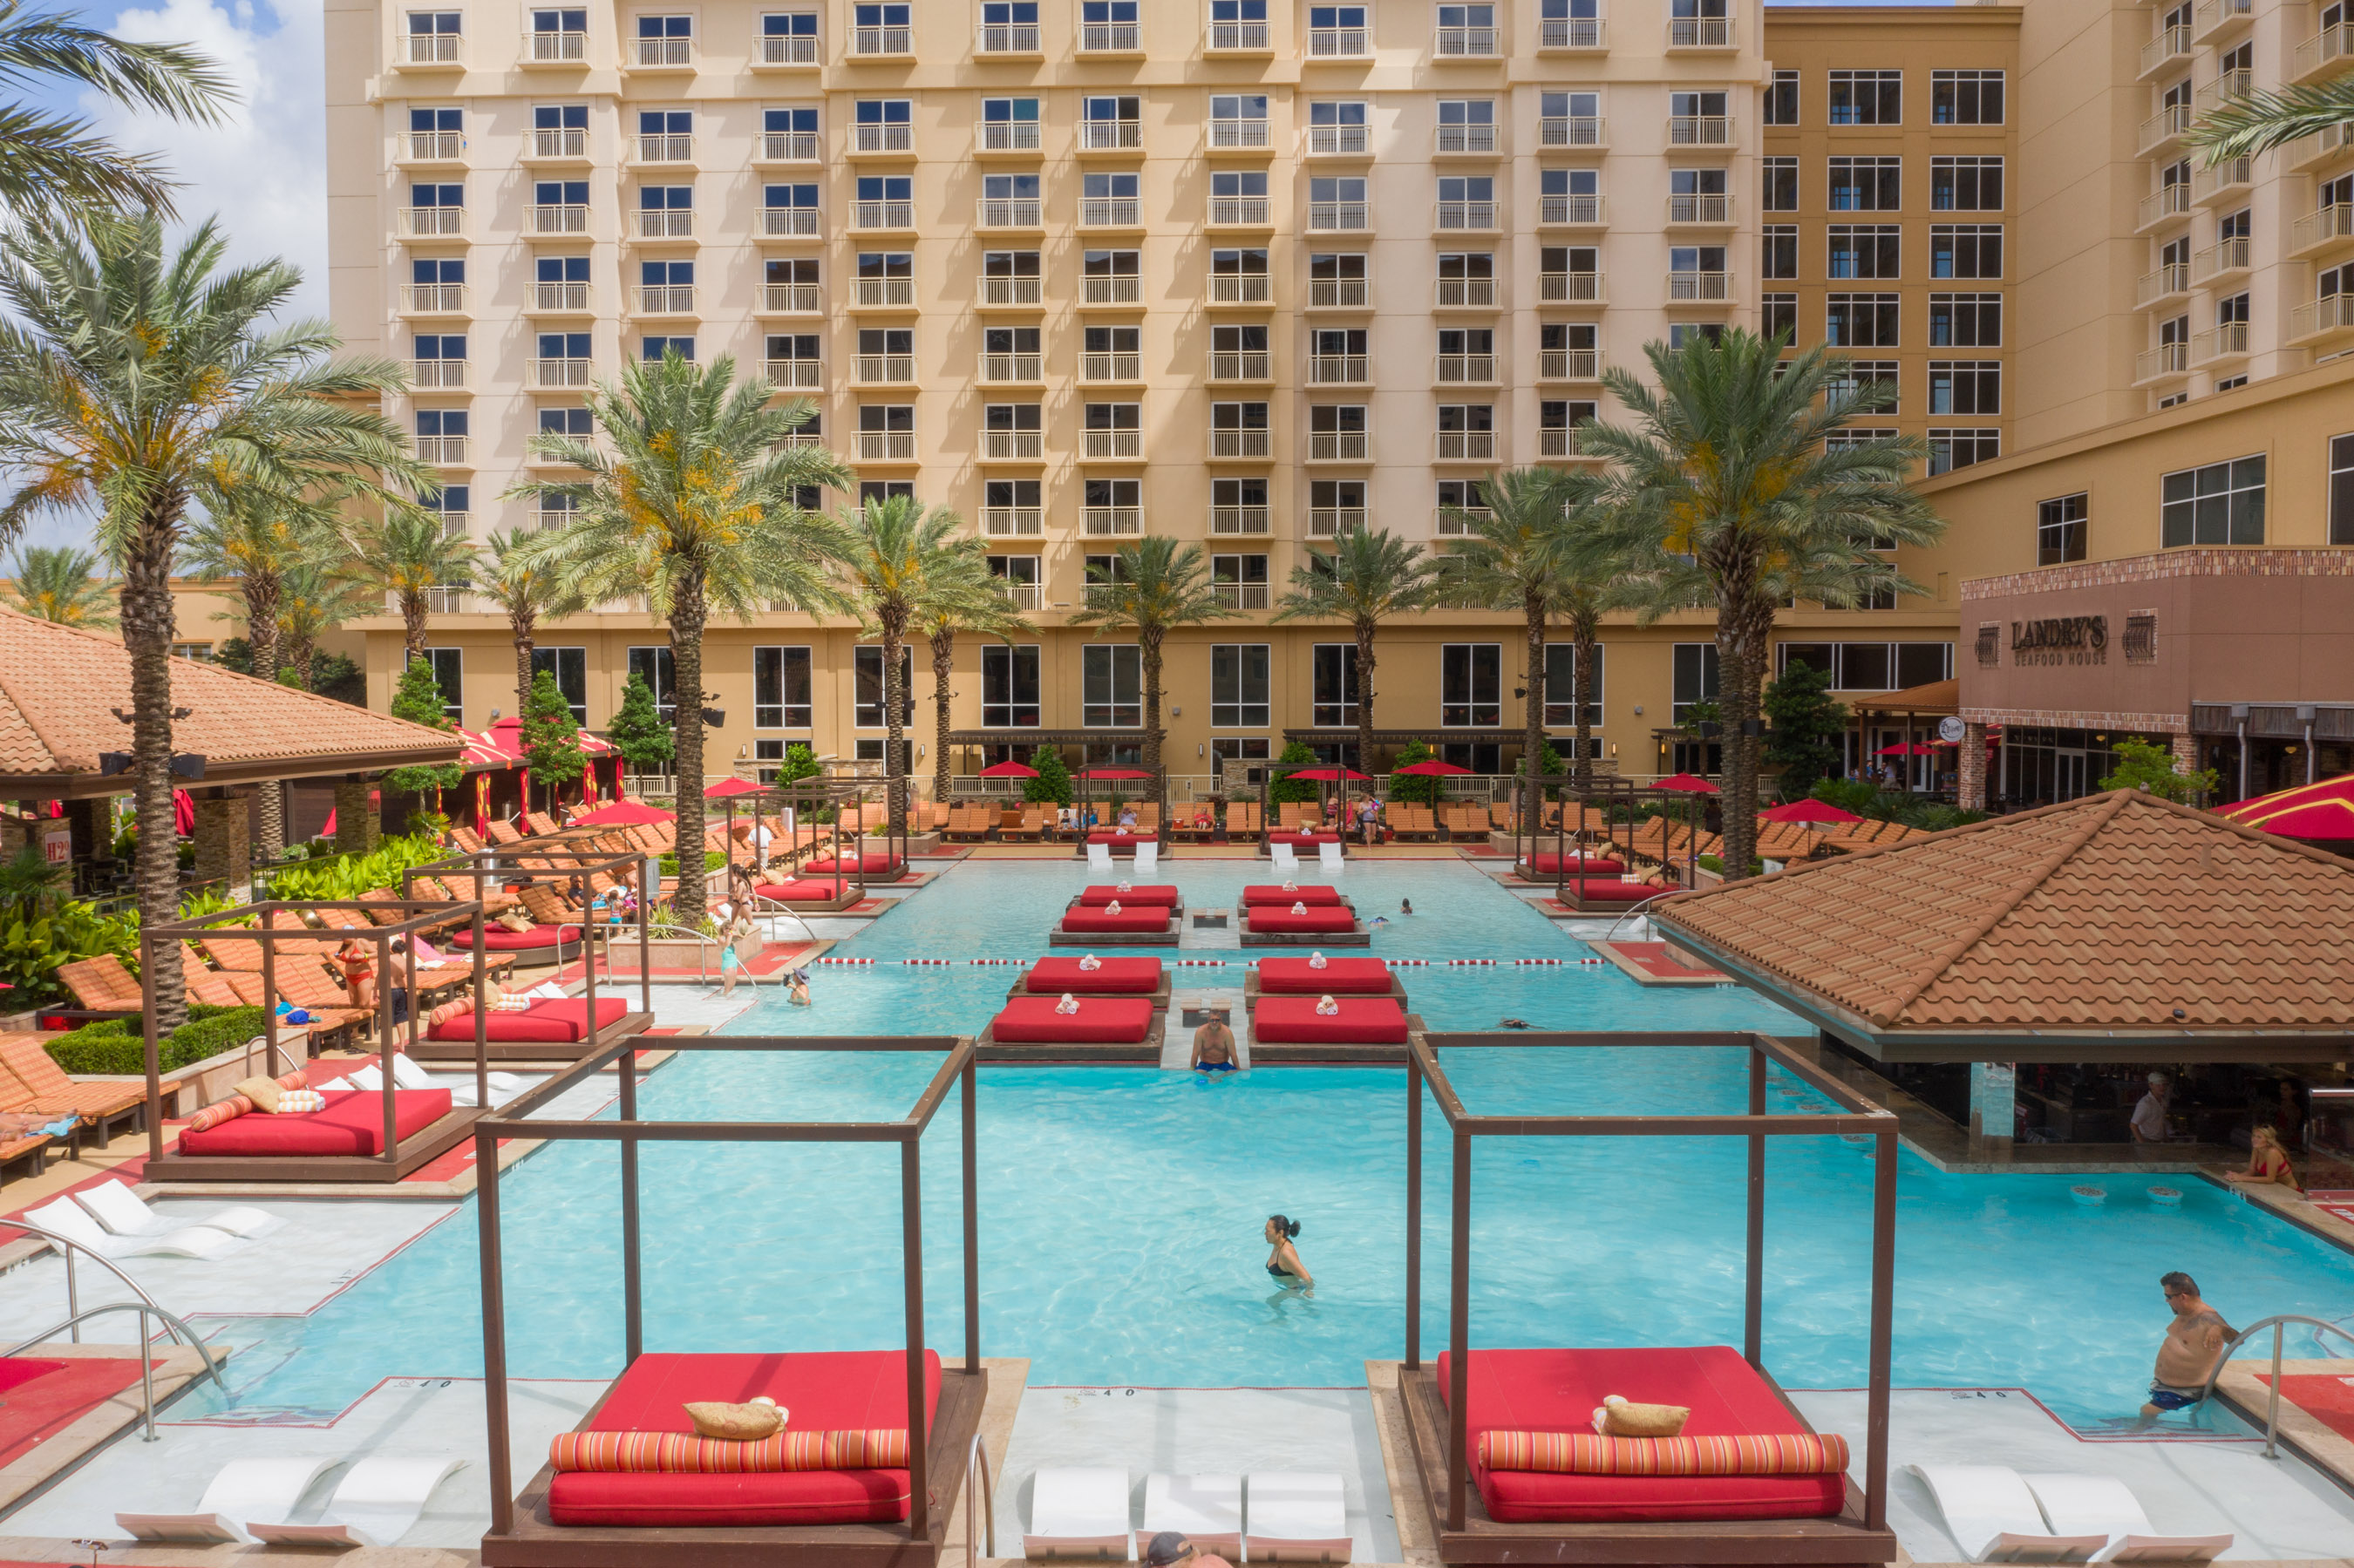 Golden Nugget in Las Vegas is a best pool hotel